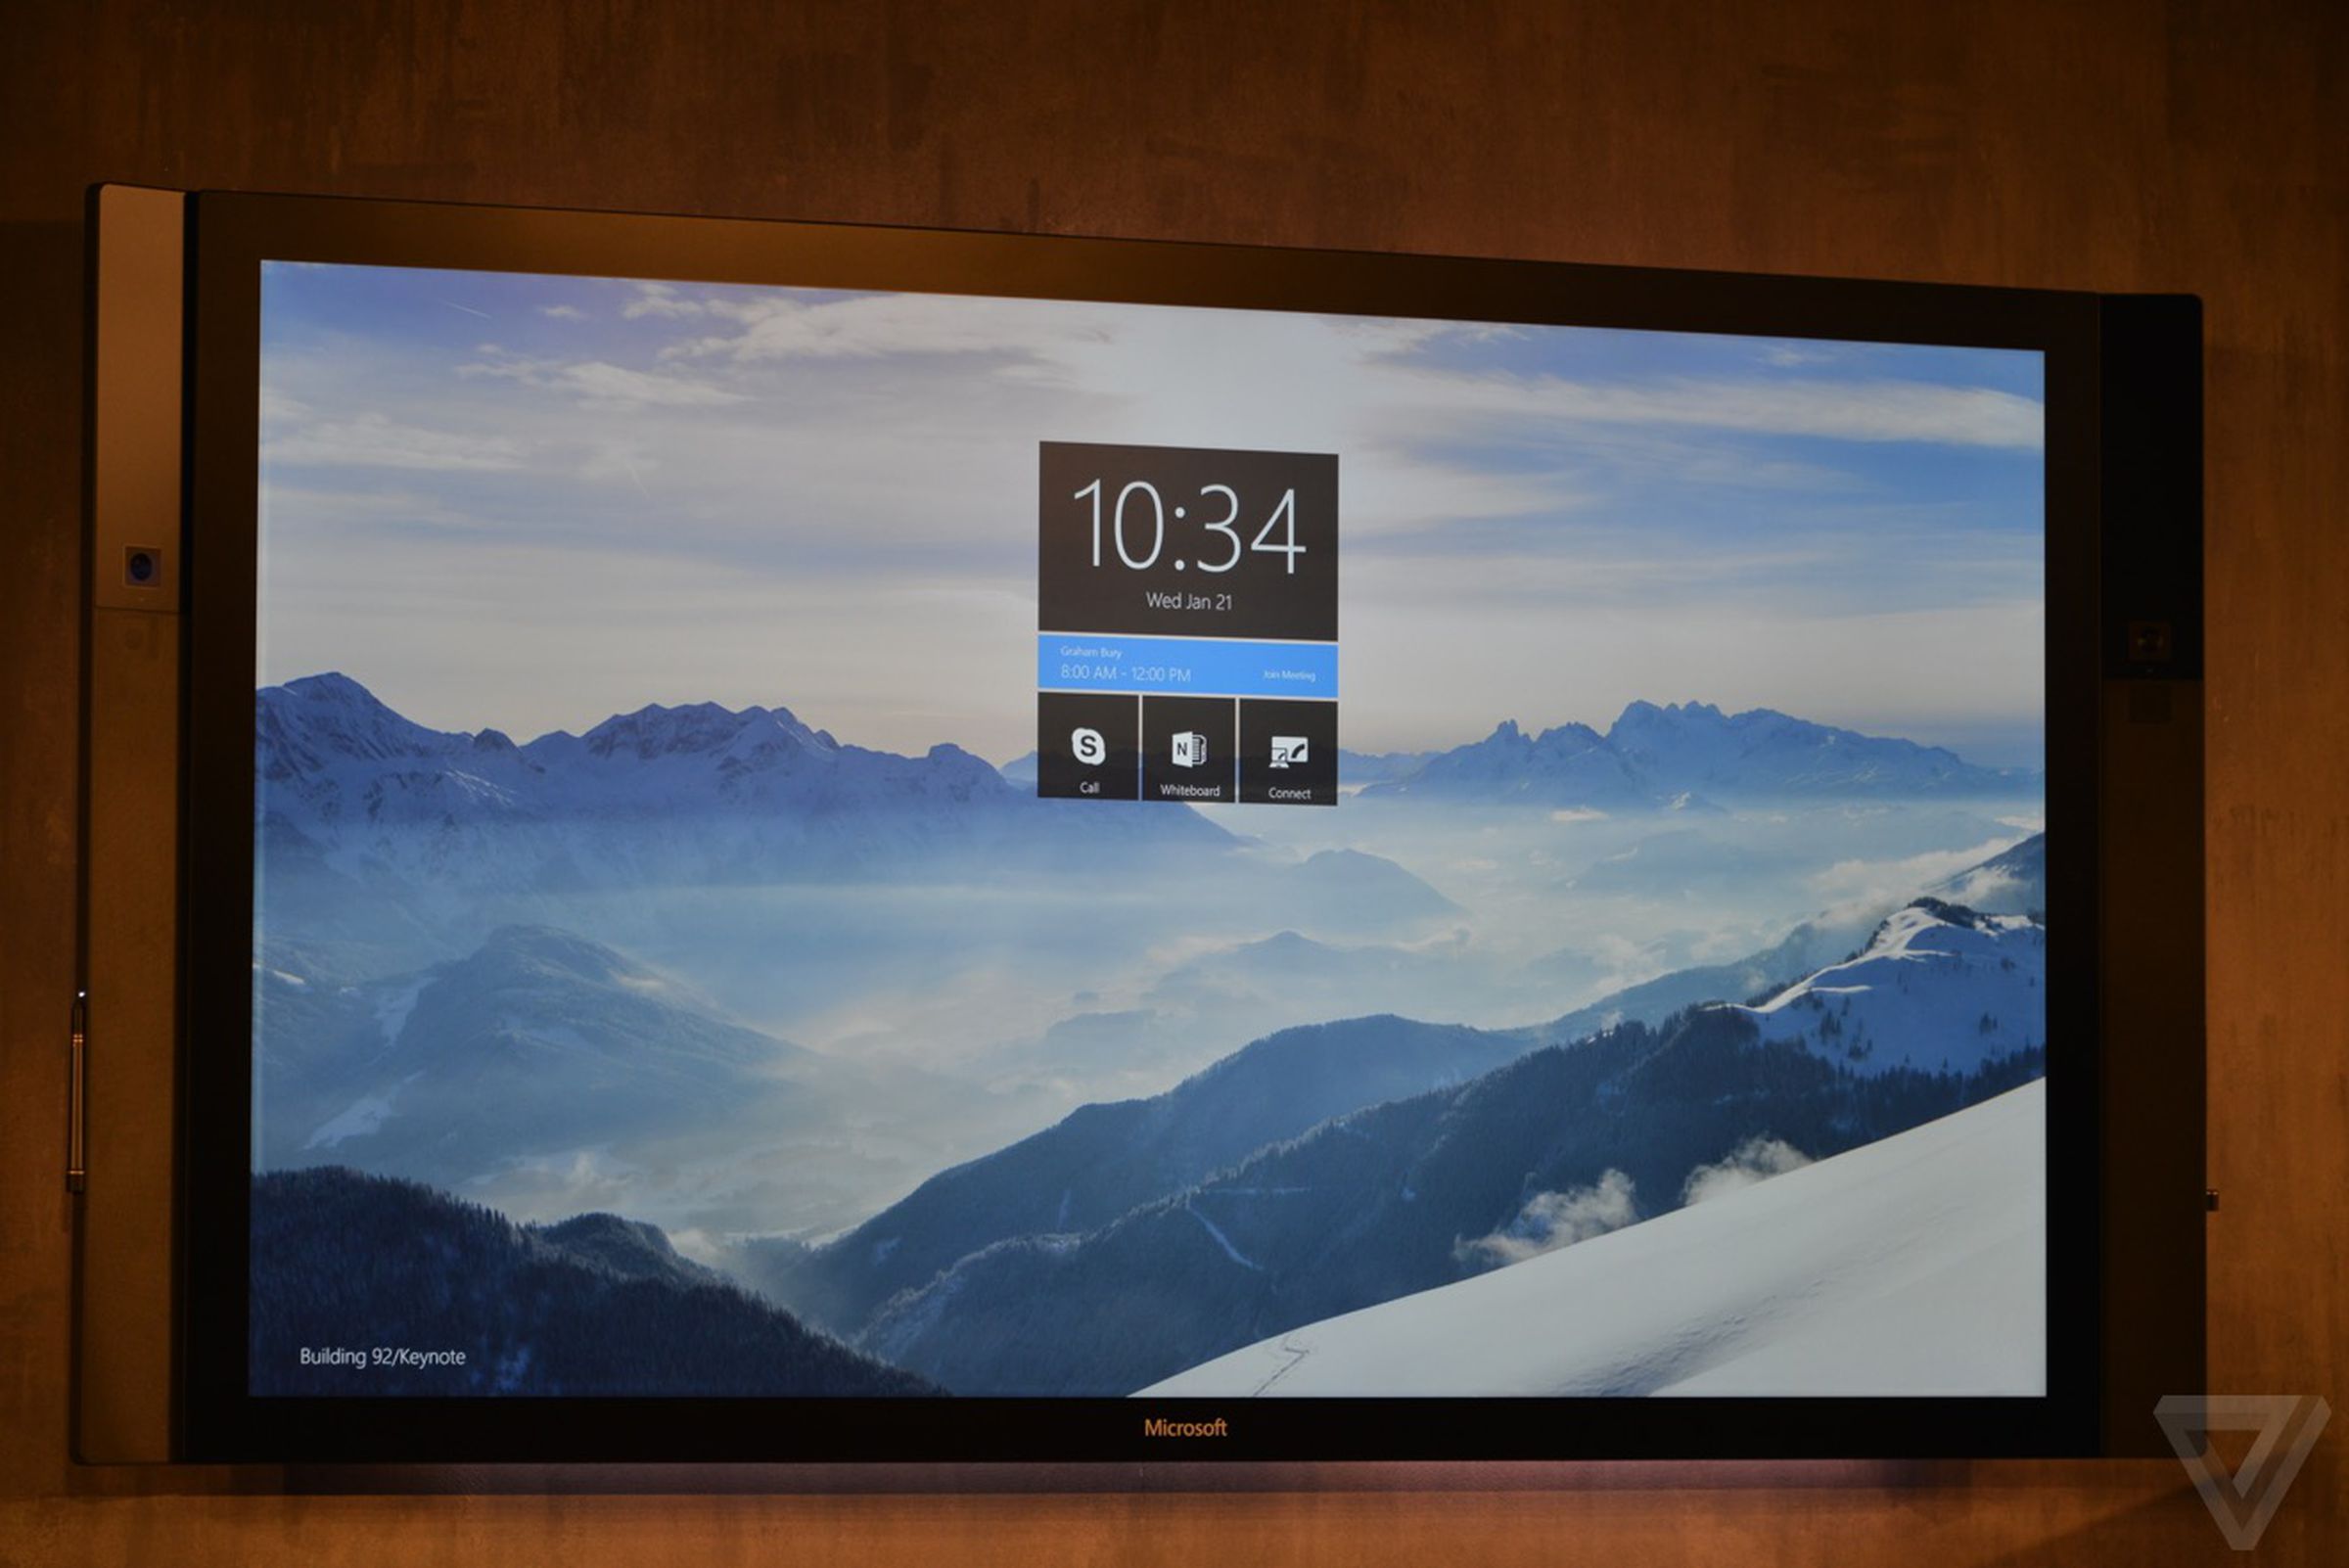 Microsoft Surface Hub in photos